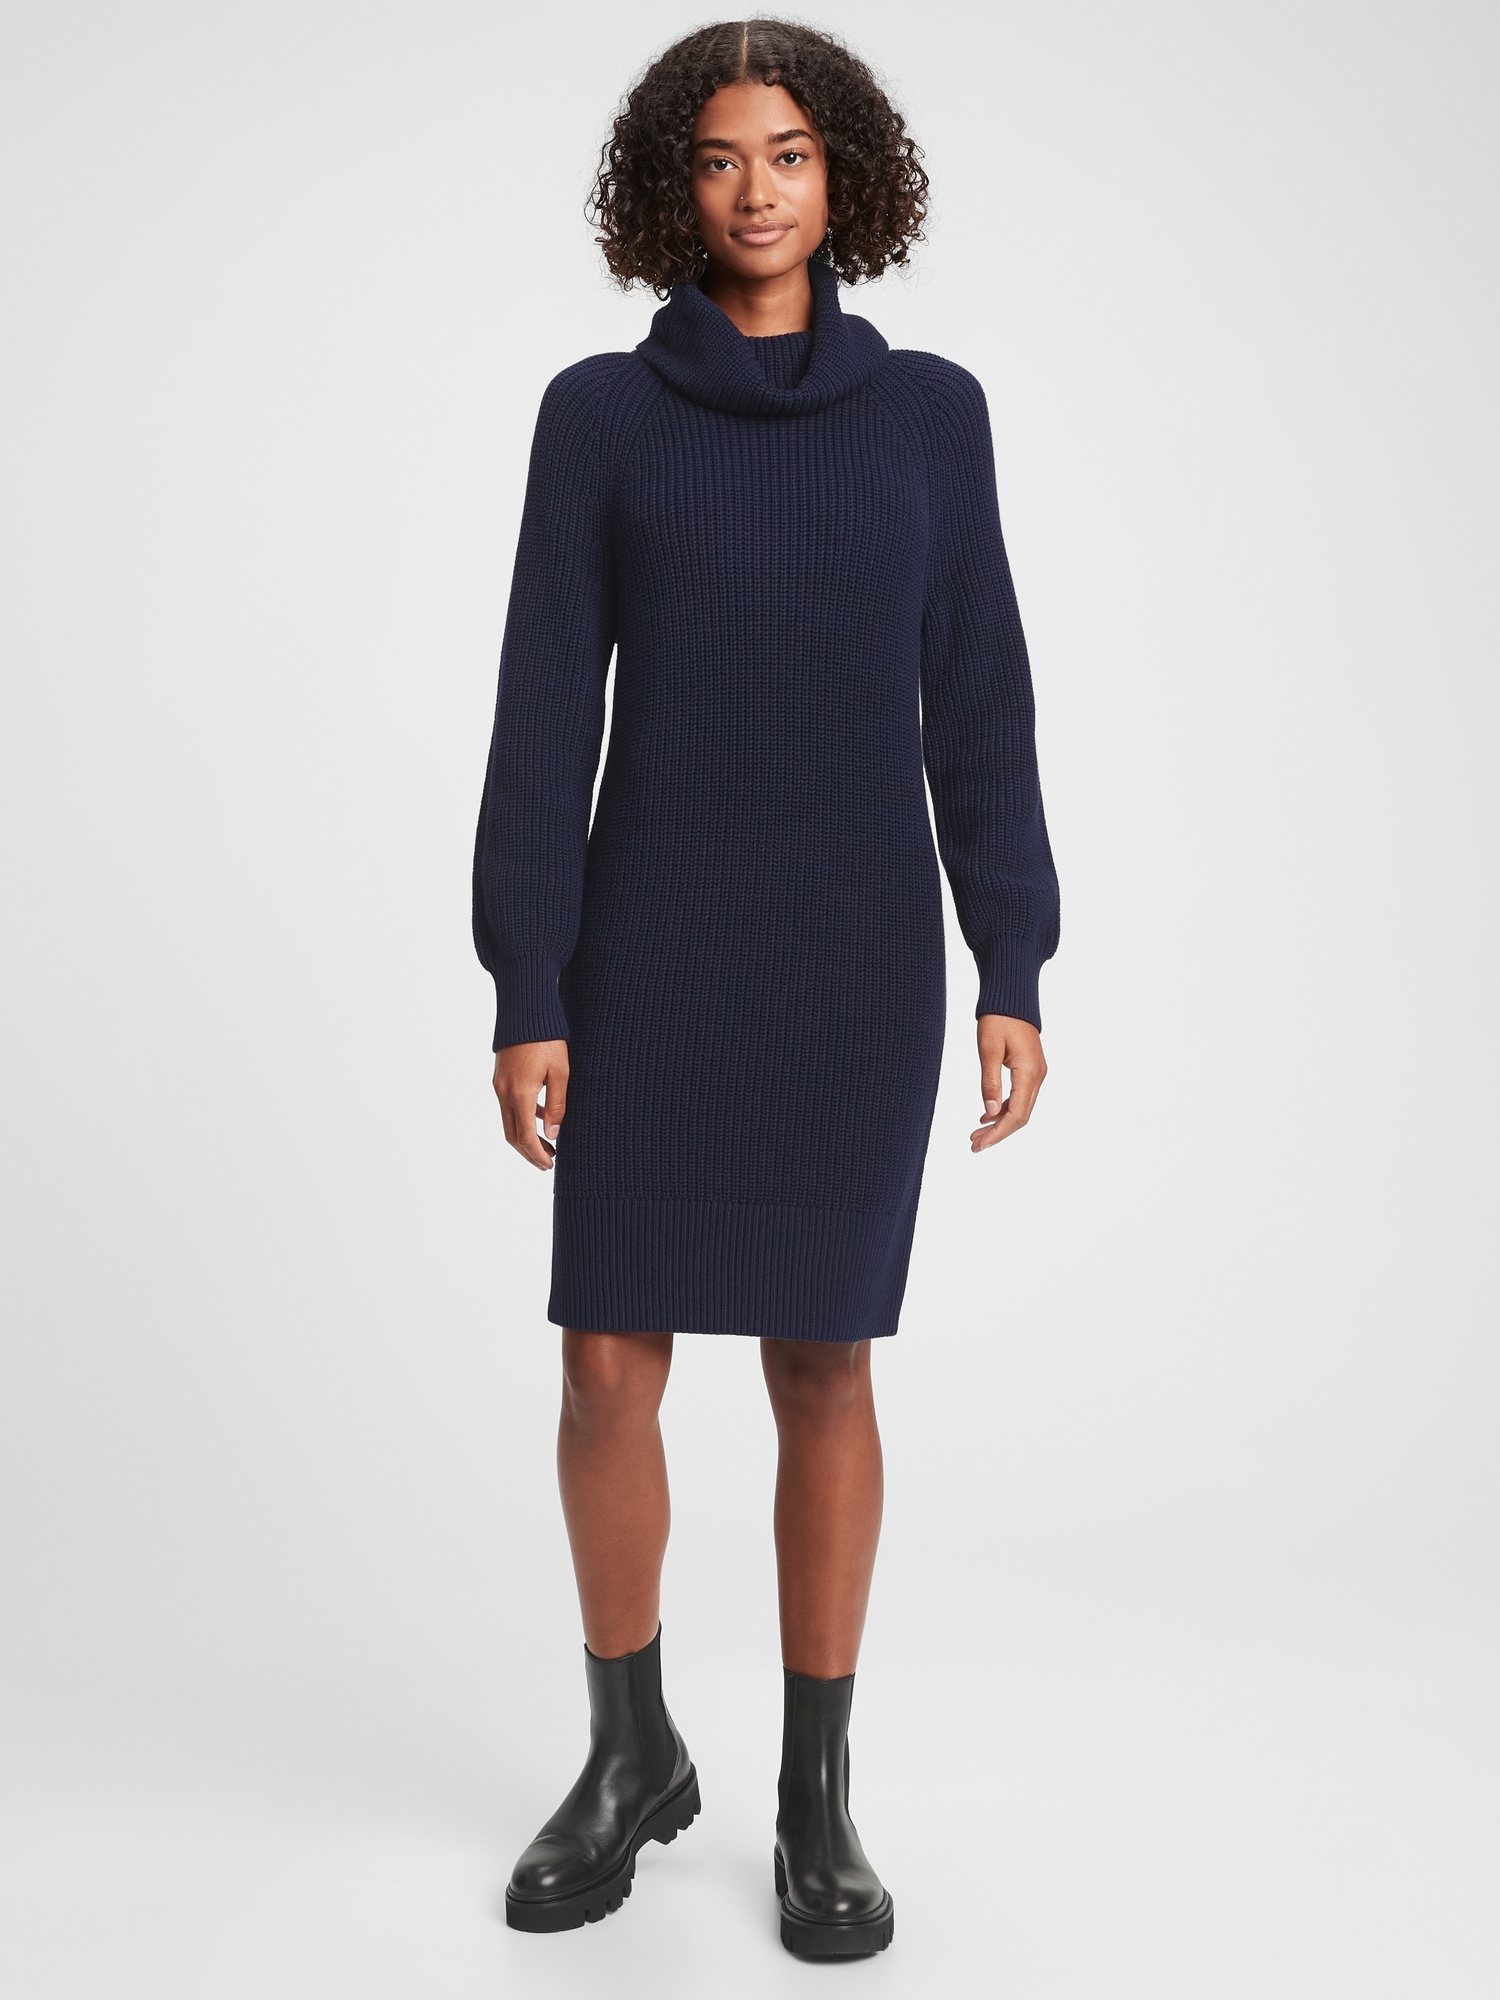 Cowlneck Sweater Dress | Gap Factory